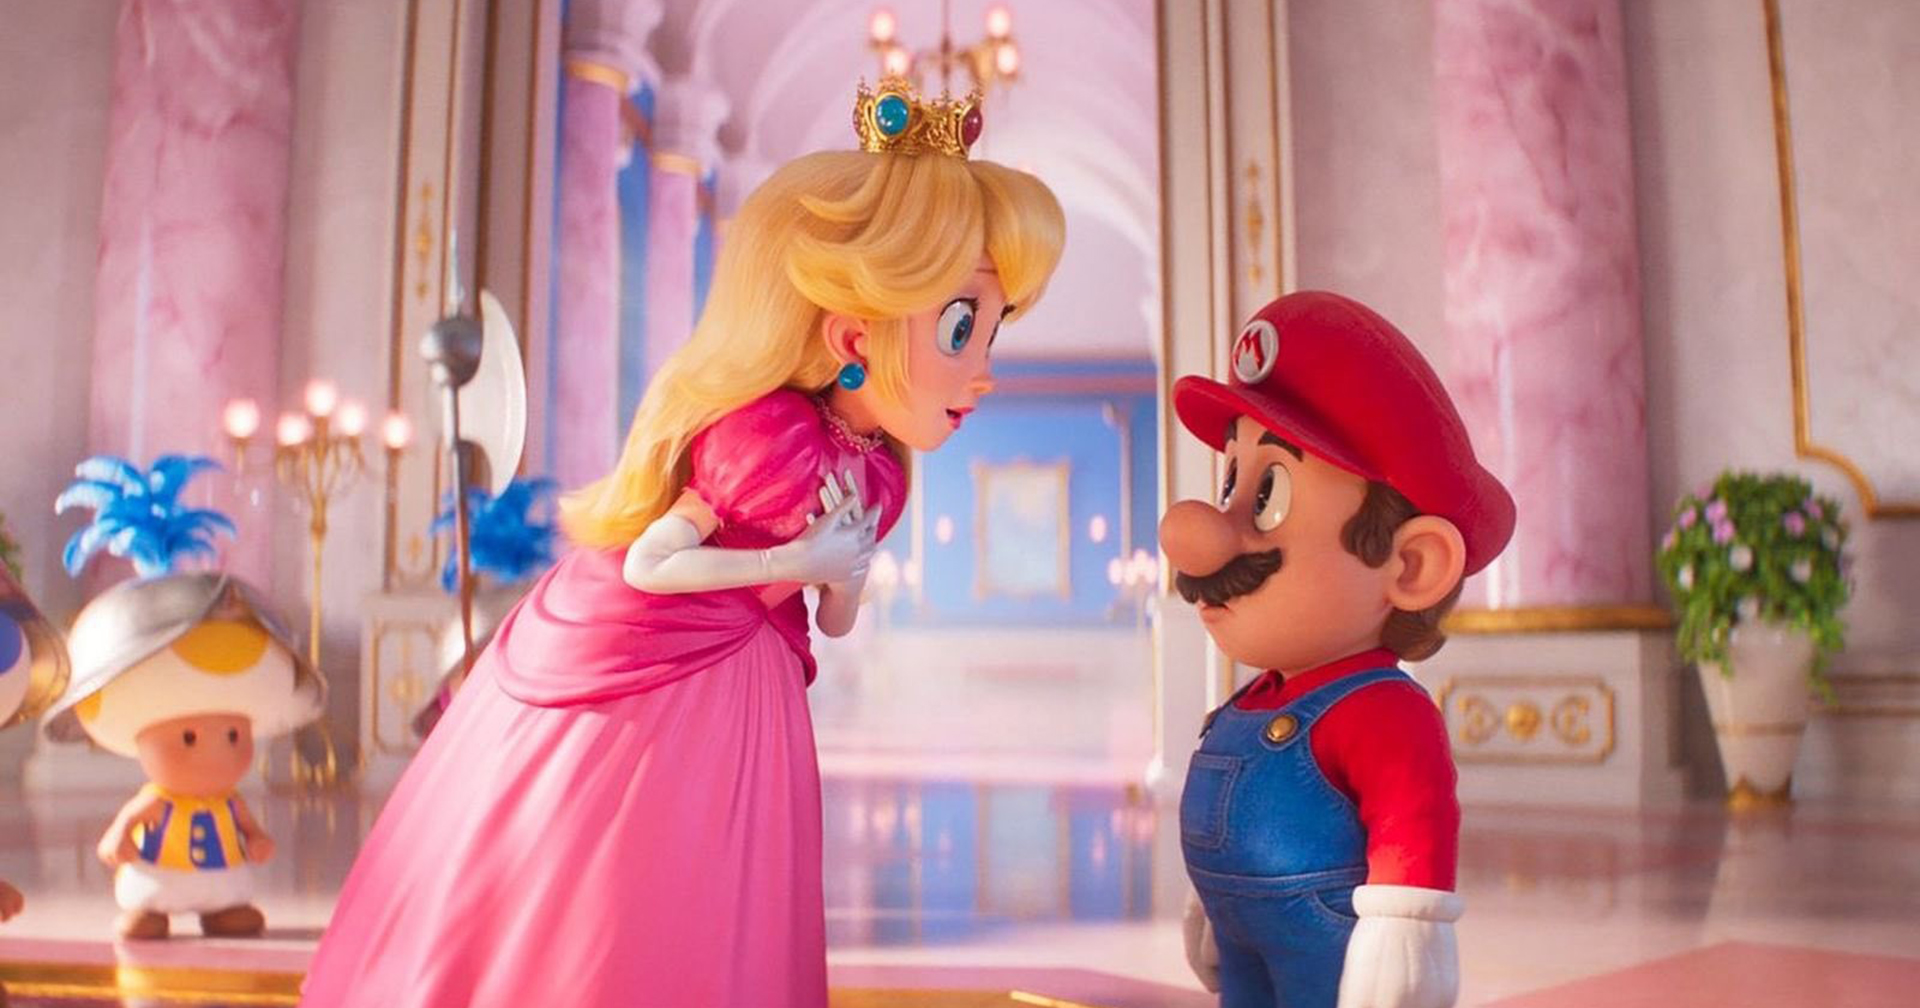 ‘The Super Mario Bros. Movie’ ครองแชมป์ 4 สัปดาห์ซ้อน: รายได้ทั่วโลกทะลุ 1,000 ล้านเหรียญแล้ว